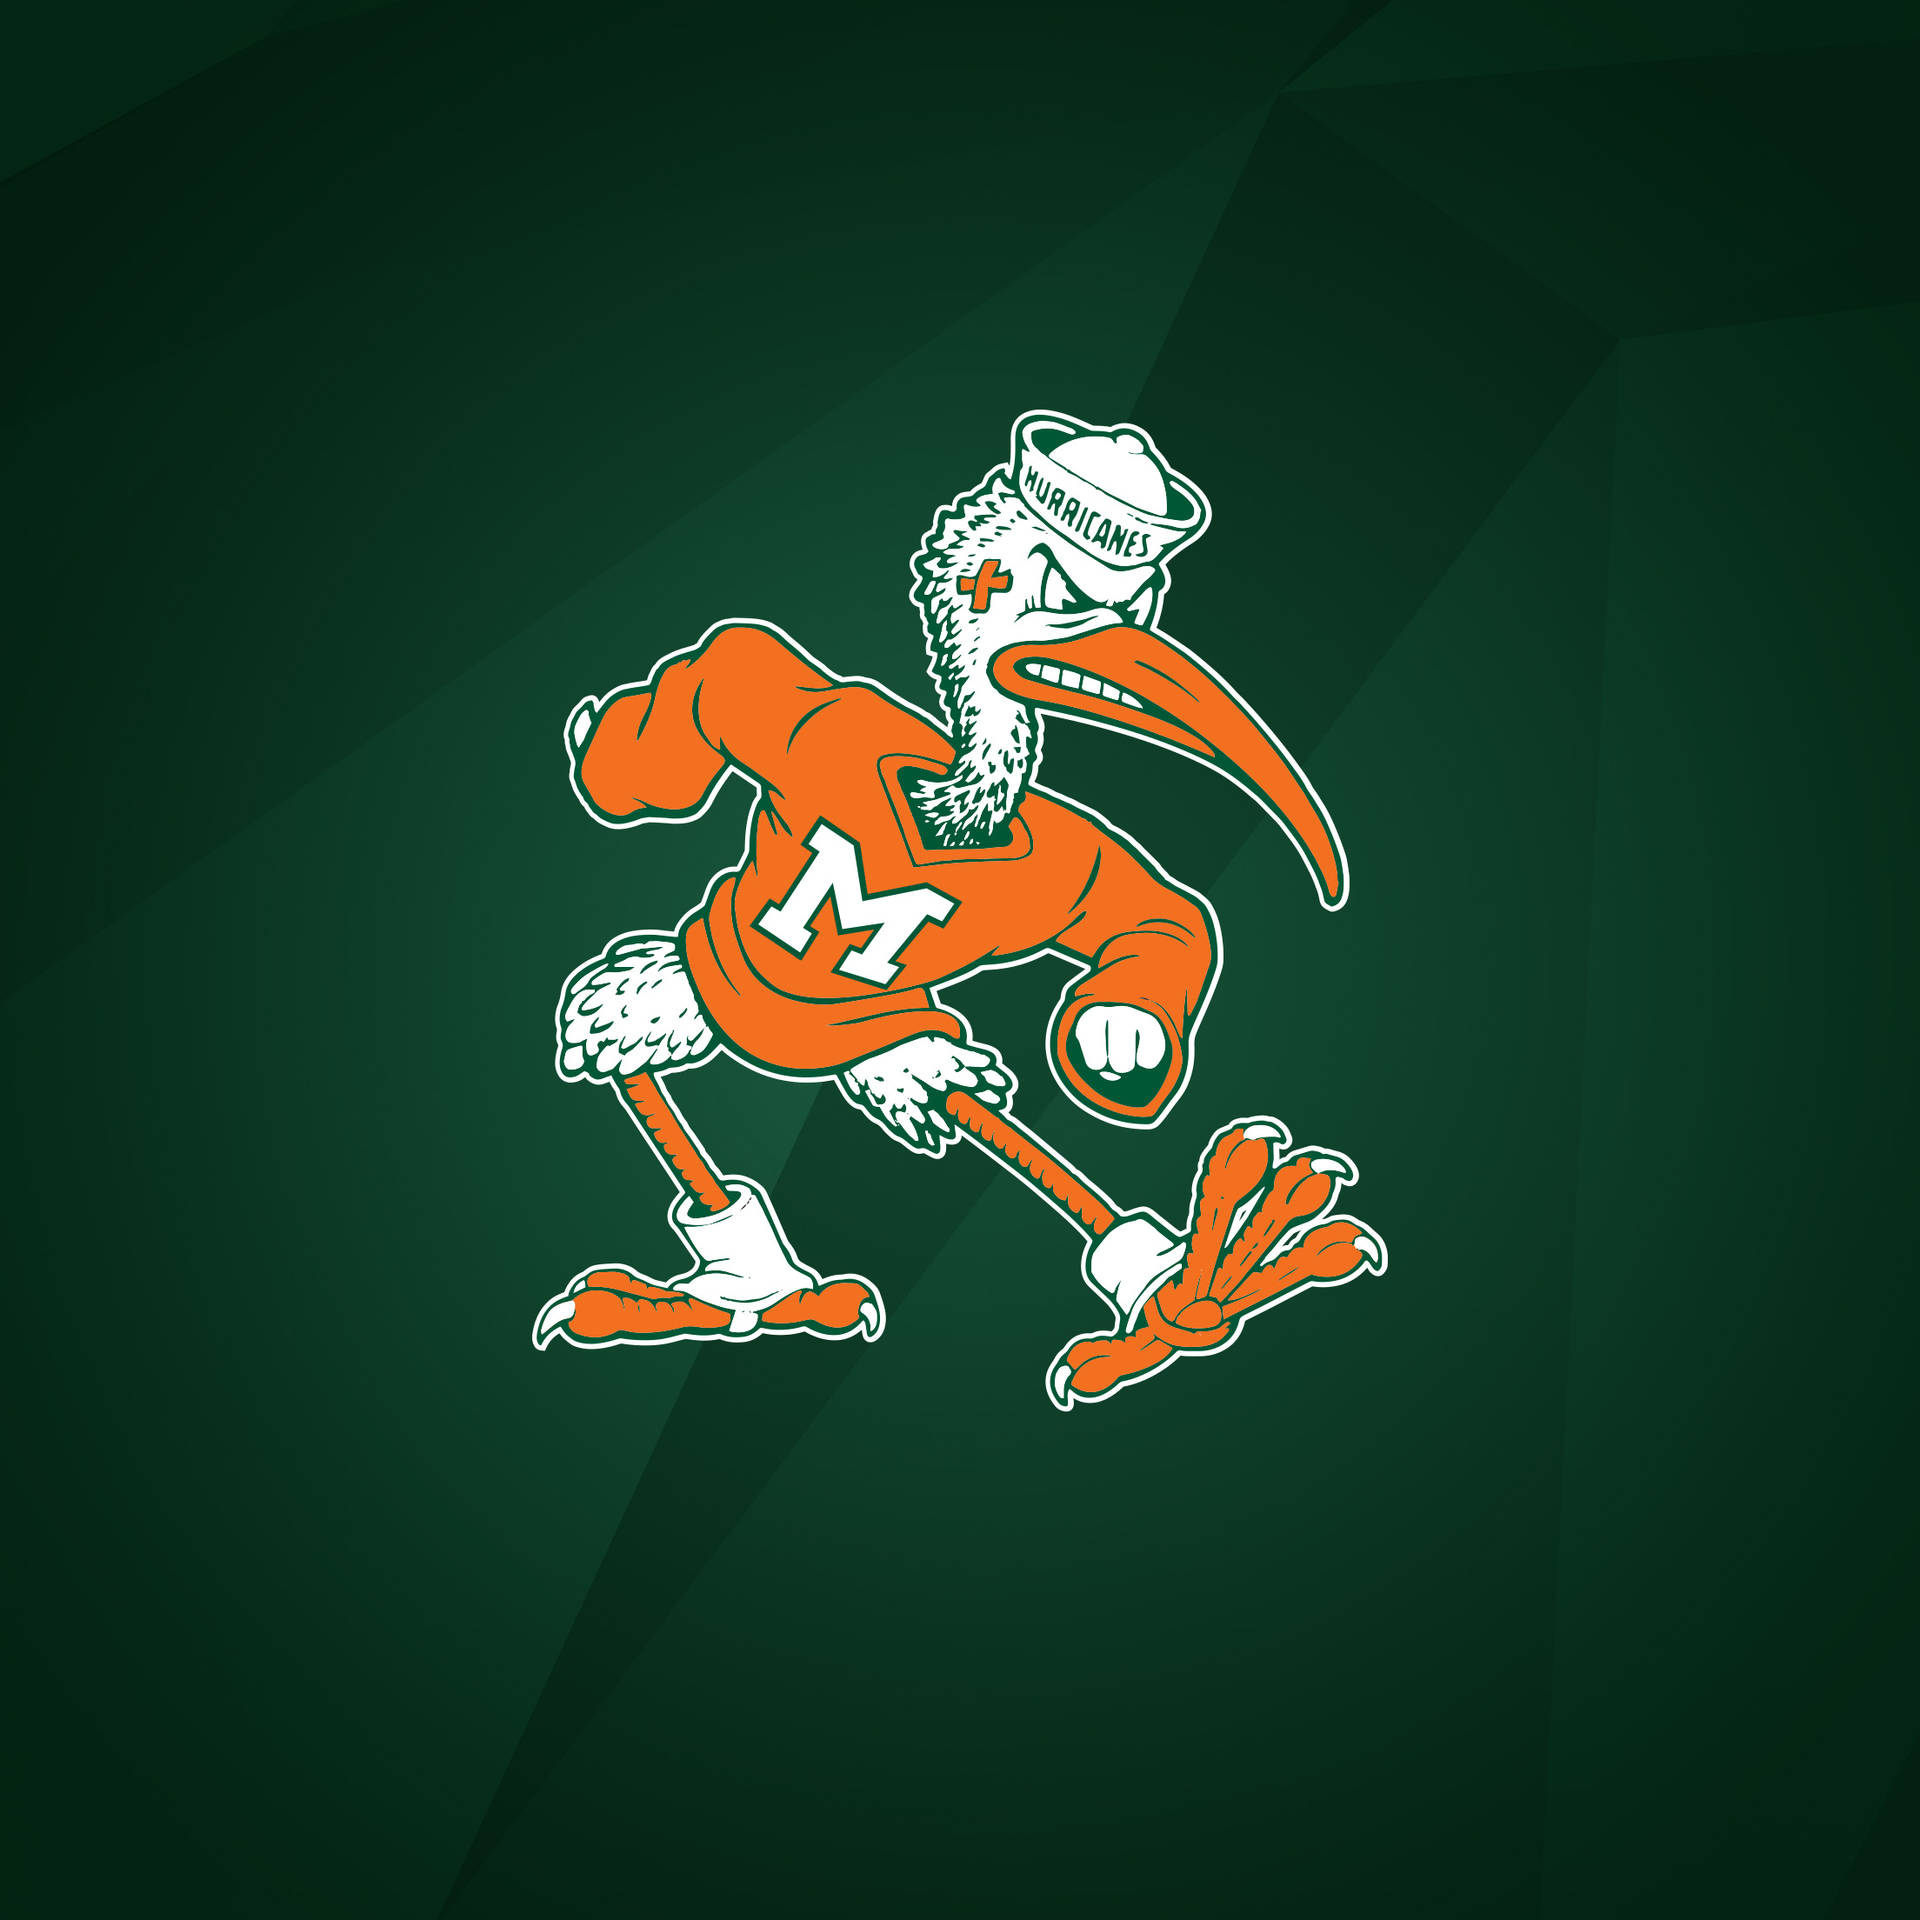 University Of Miami Green Mascot Wallpaper